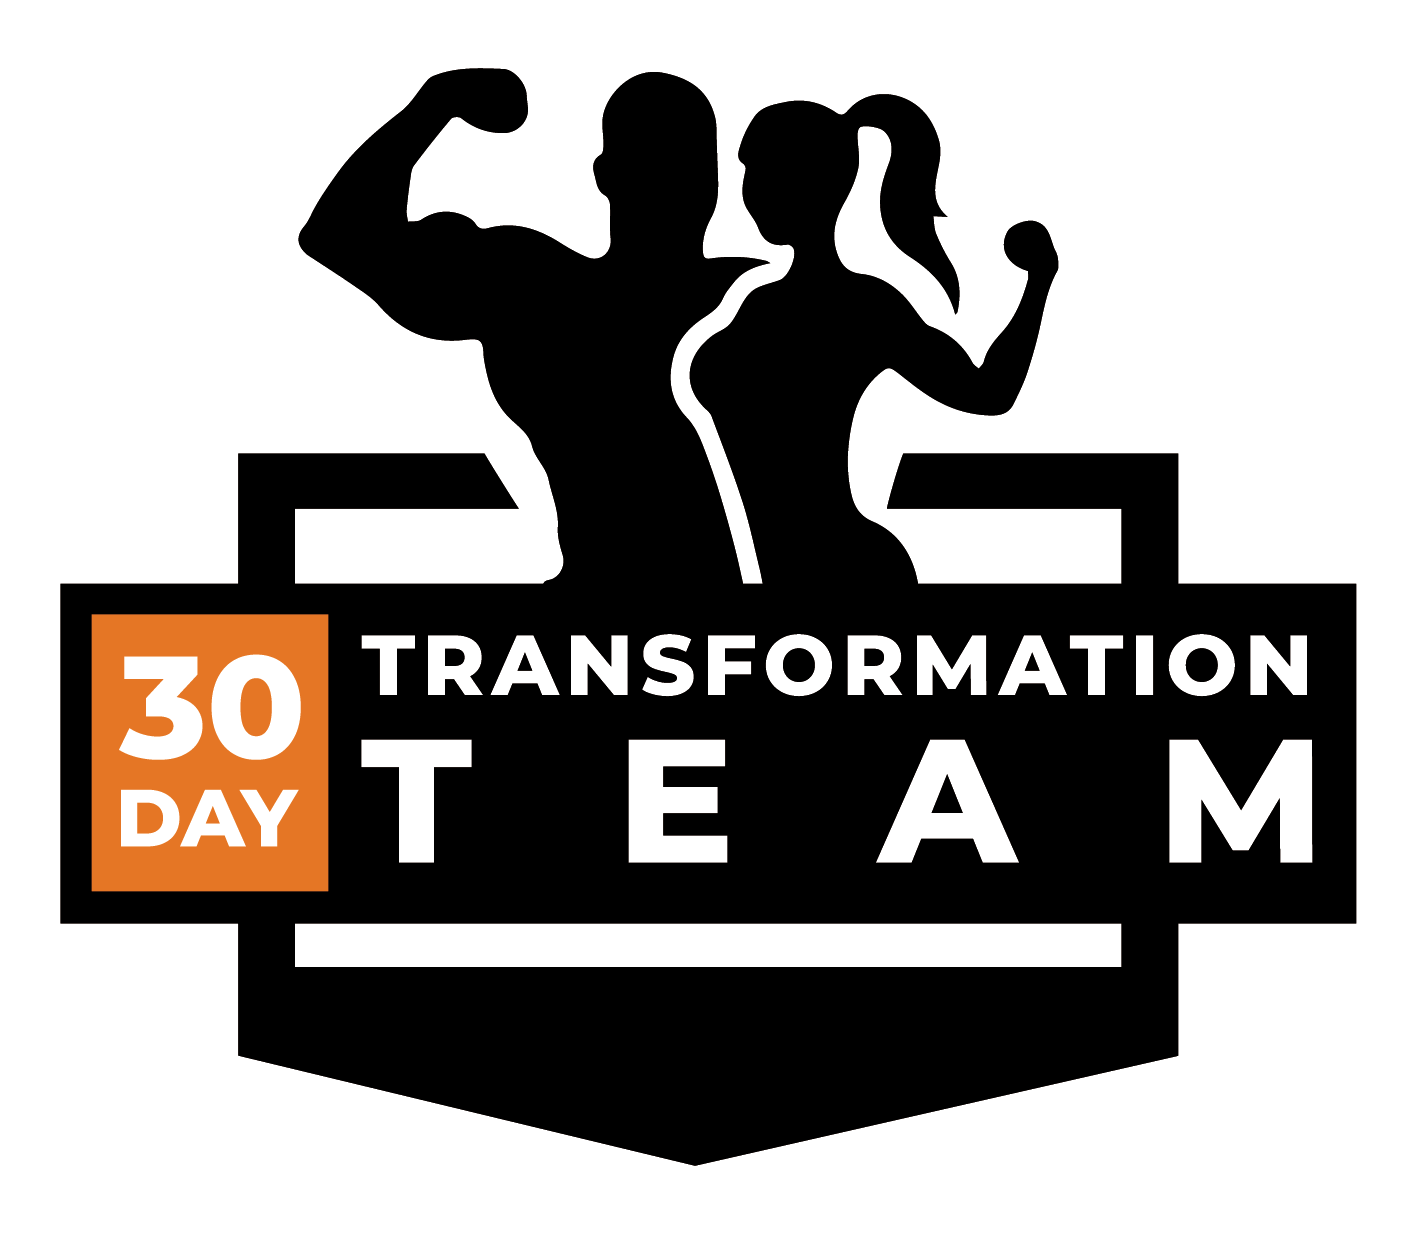 30 Day Transformation Team logo